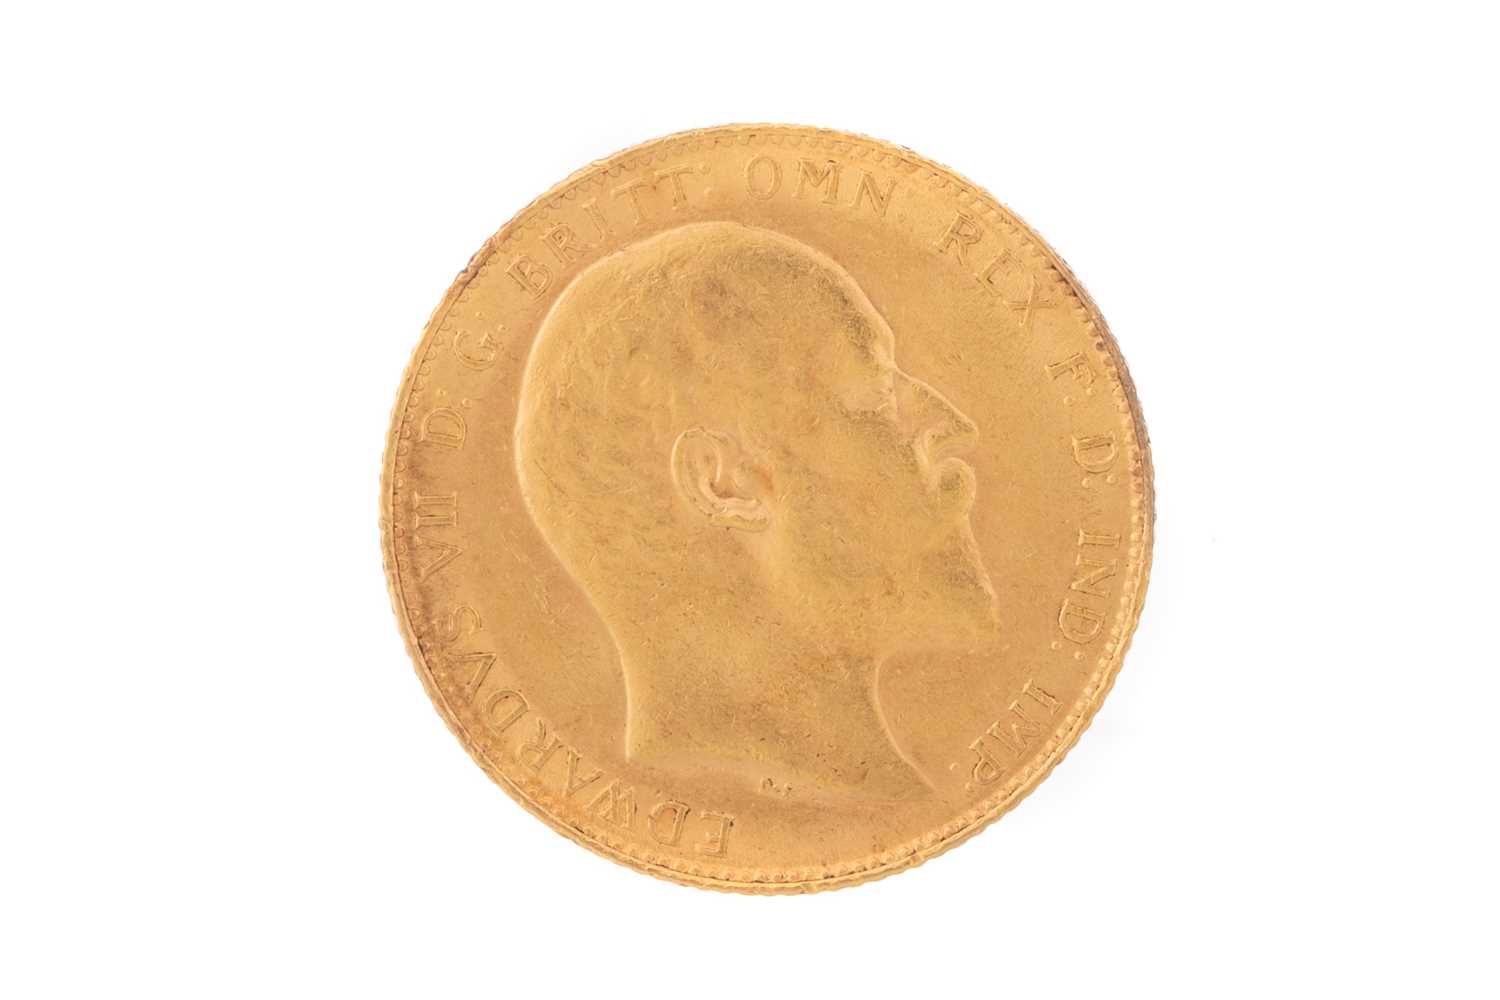 EDWARD VII GOLD SOVEREIGN 1908, - Image 2 of 2